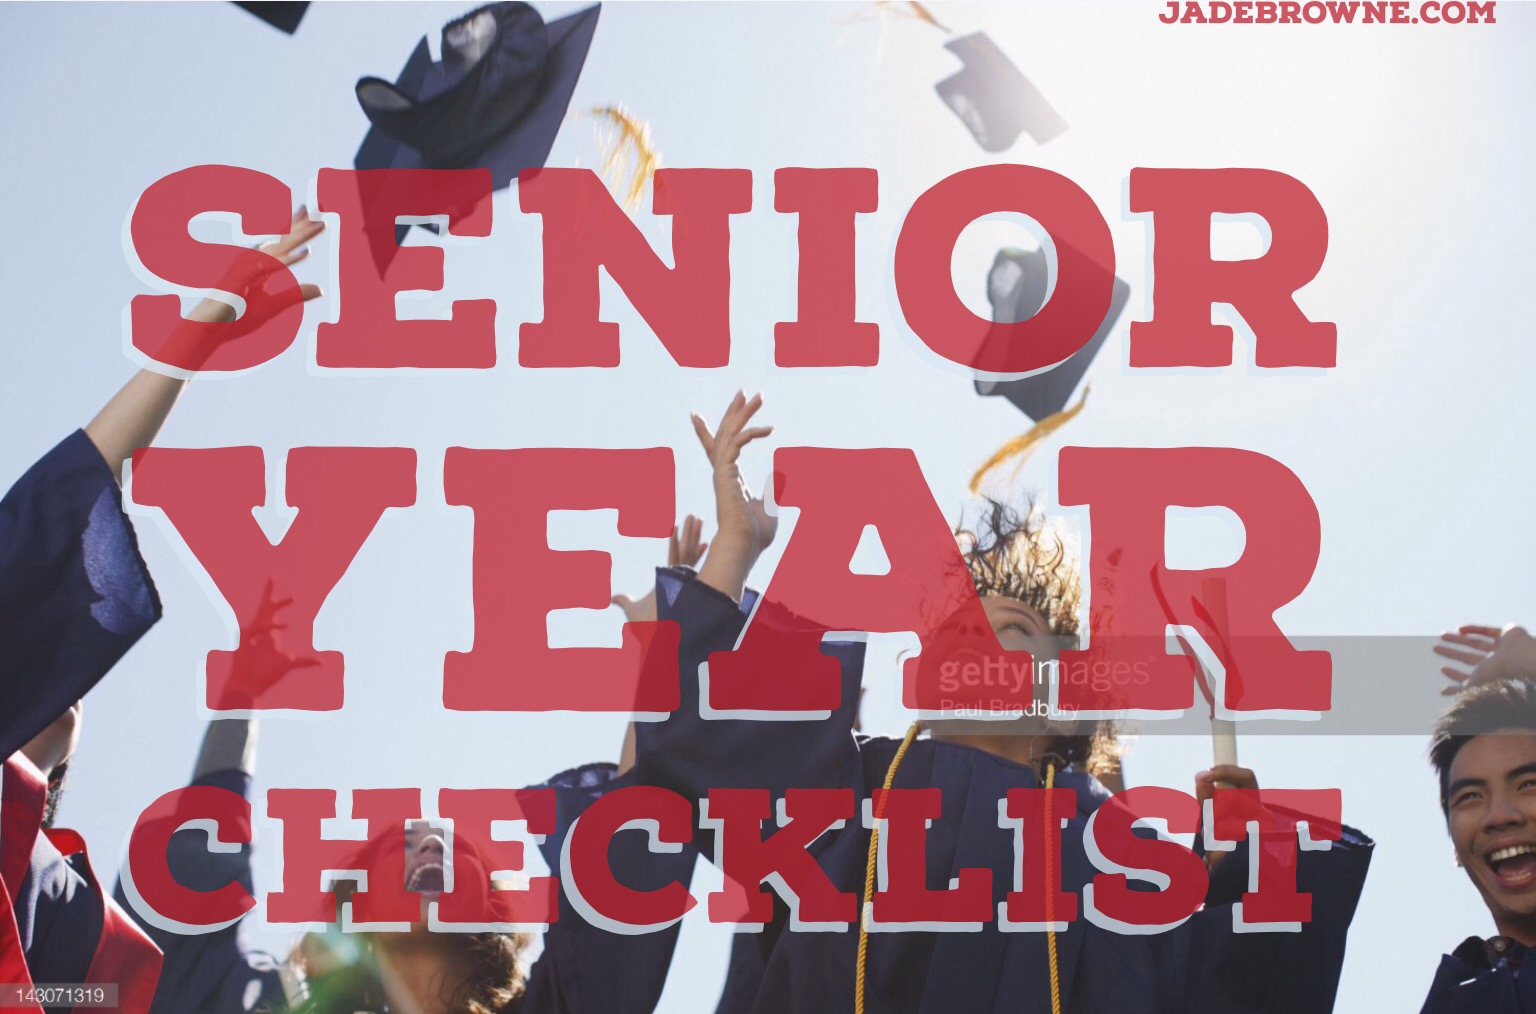 Senior Year Checklist - Just Jade